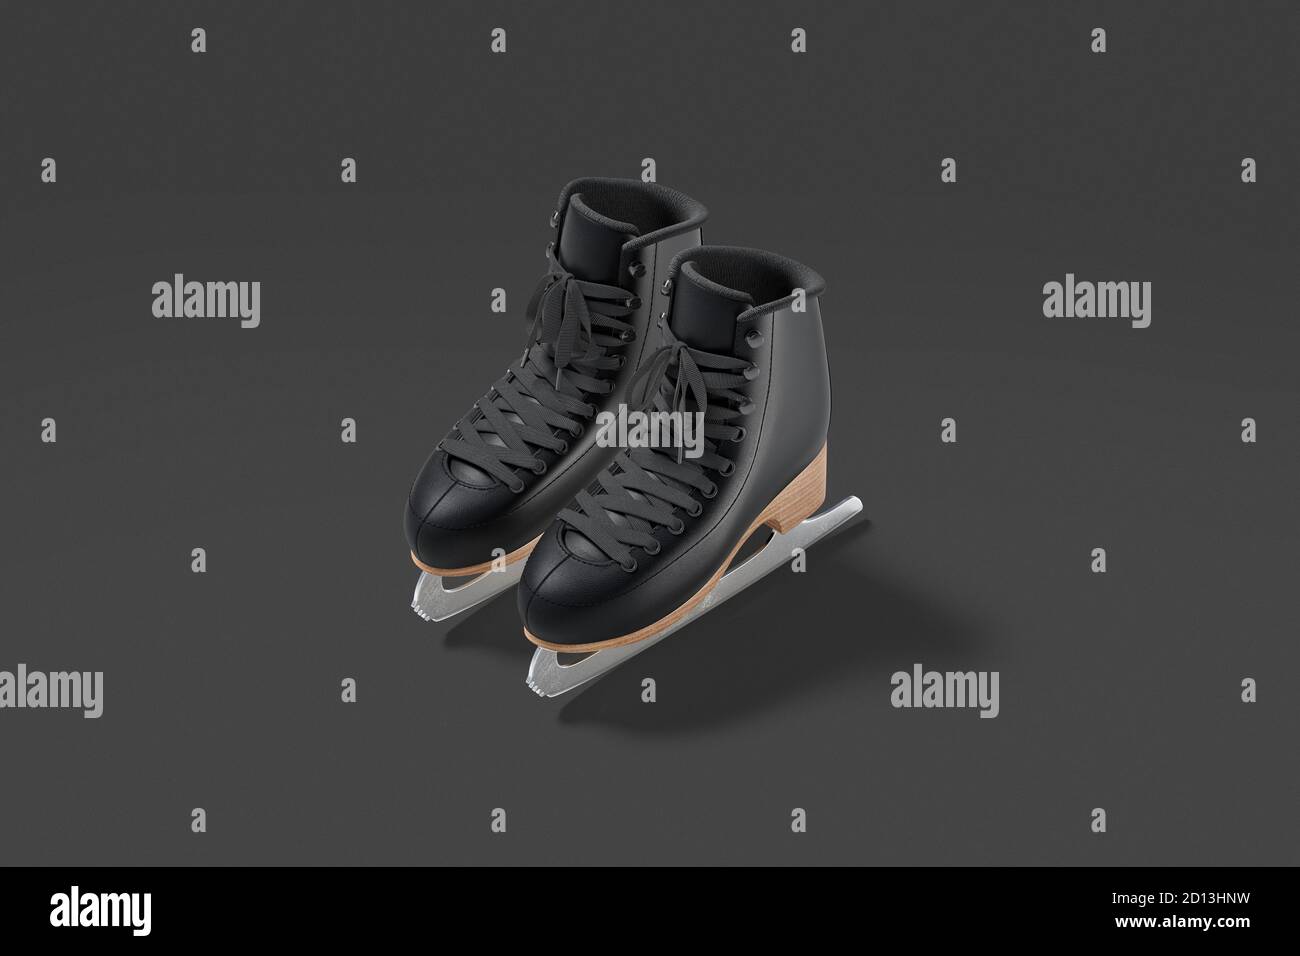 Blank black ice skates mockup pair, dark background Stock Photo